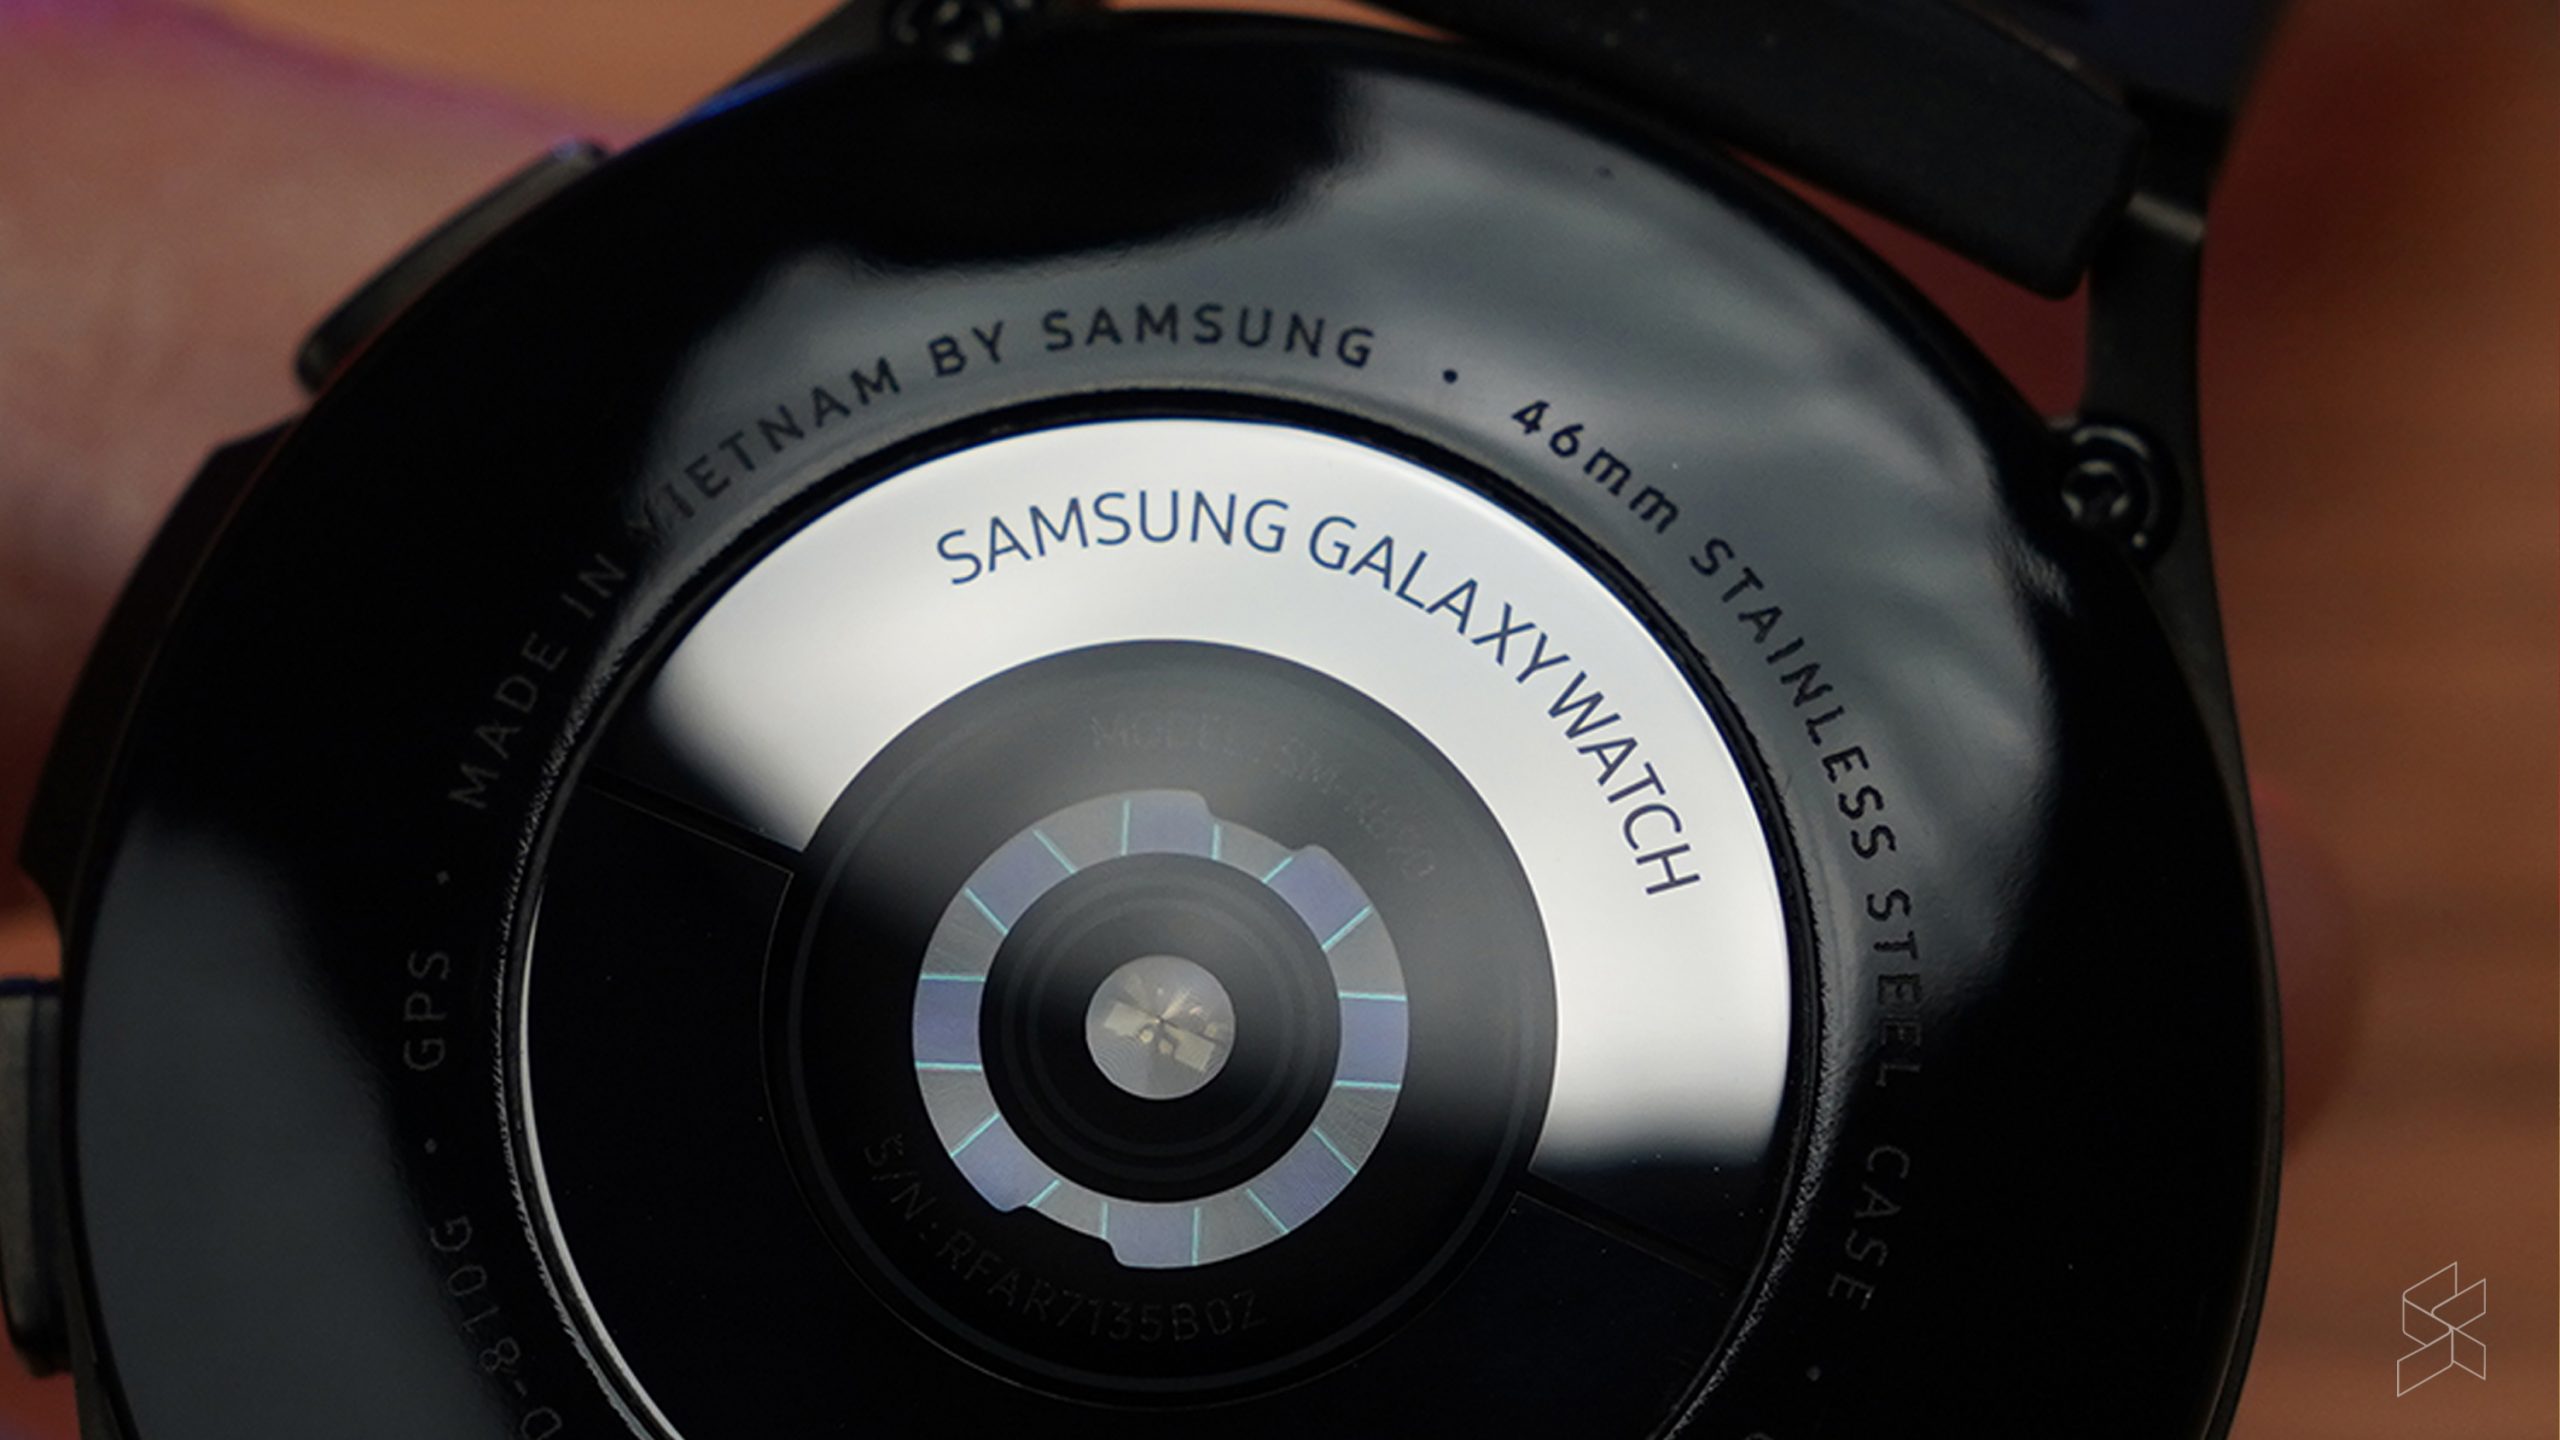 New Samsung Galaxy Watch 4 Classic